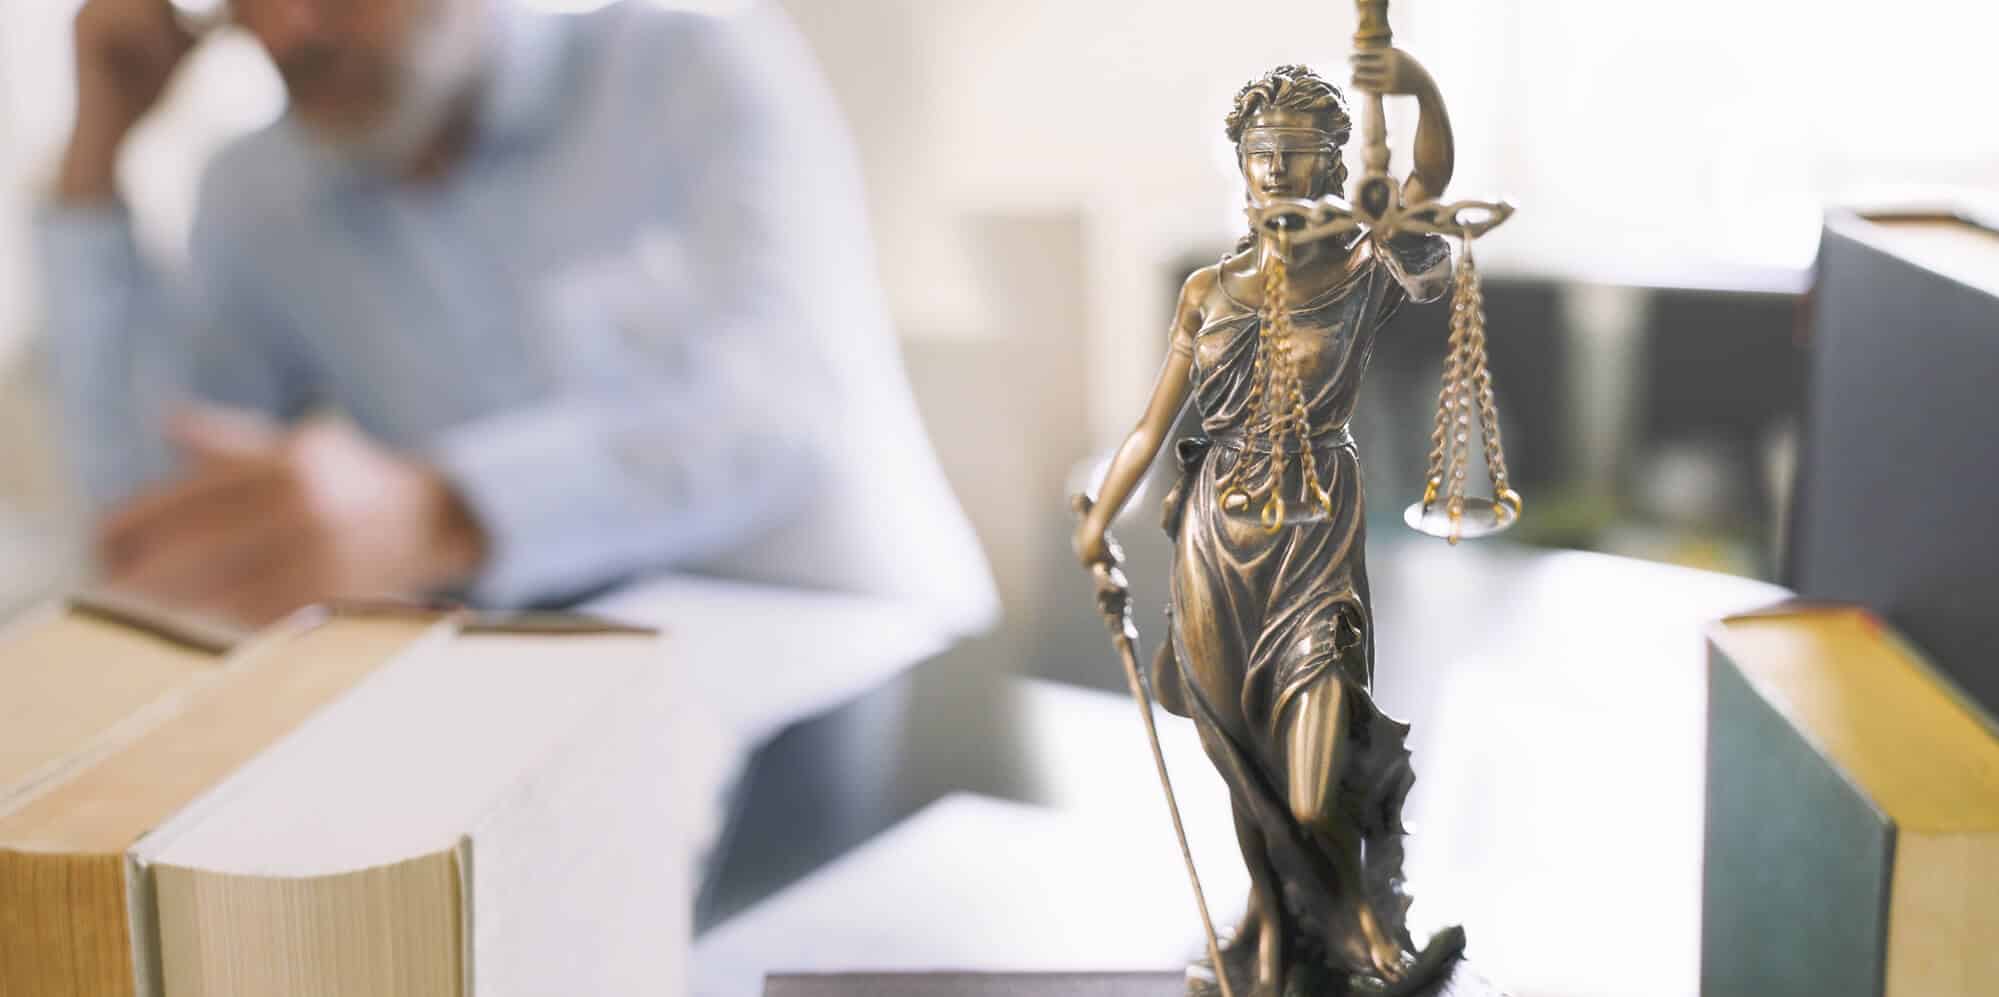 Justice statute on lawyer's desk